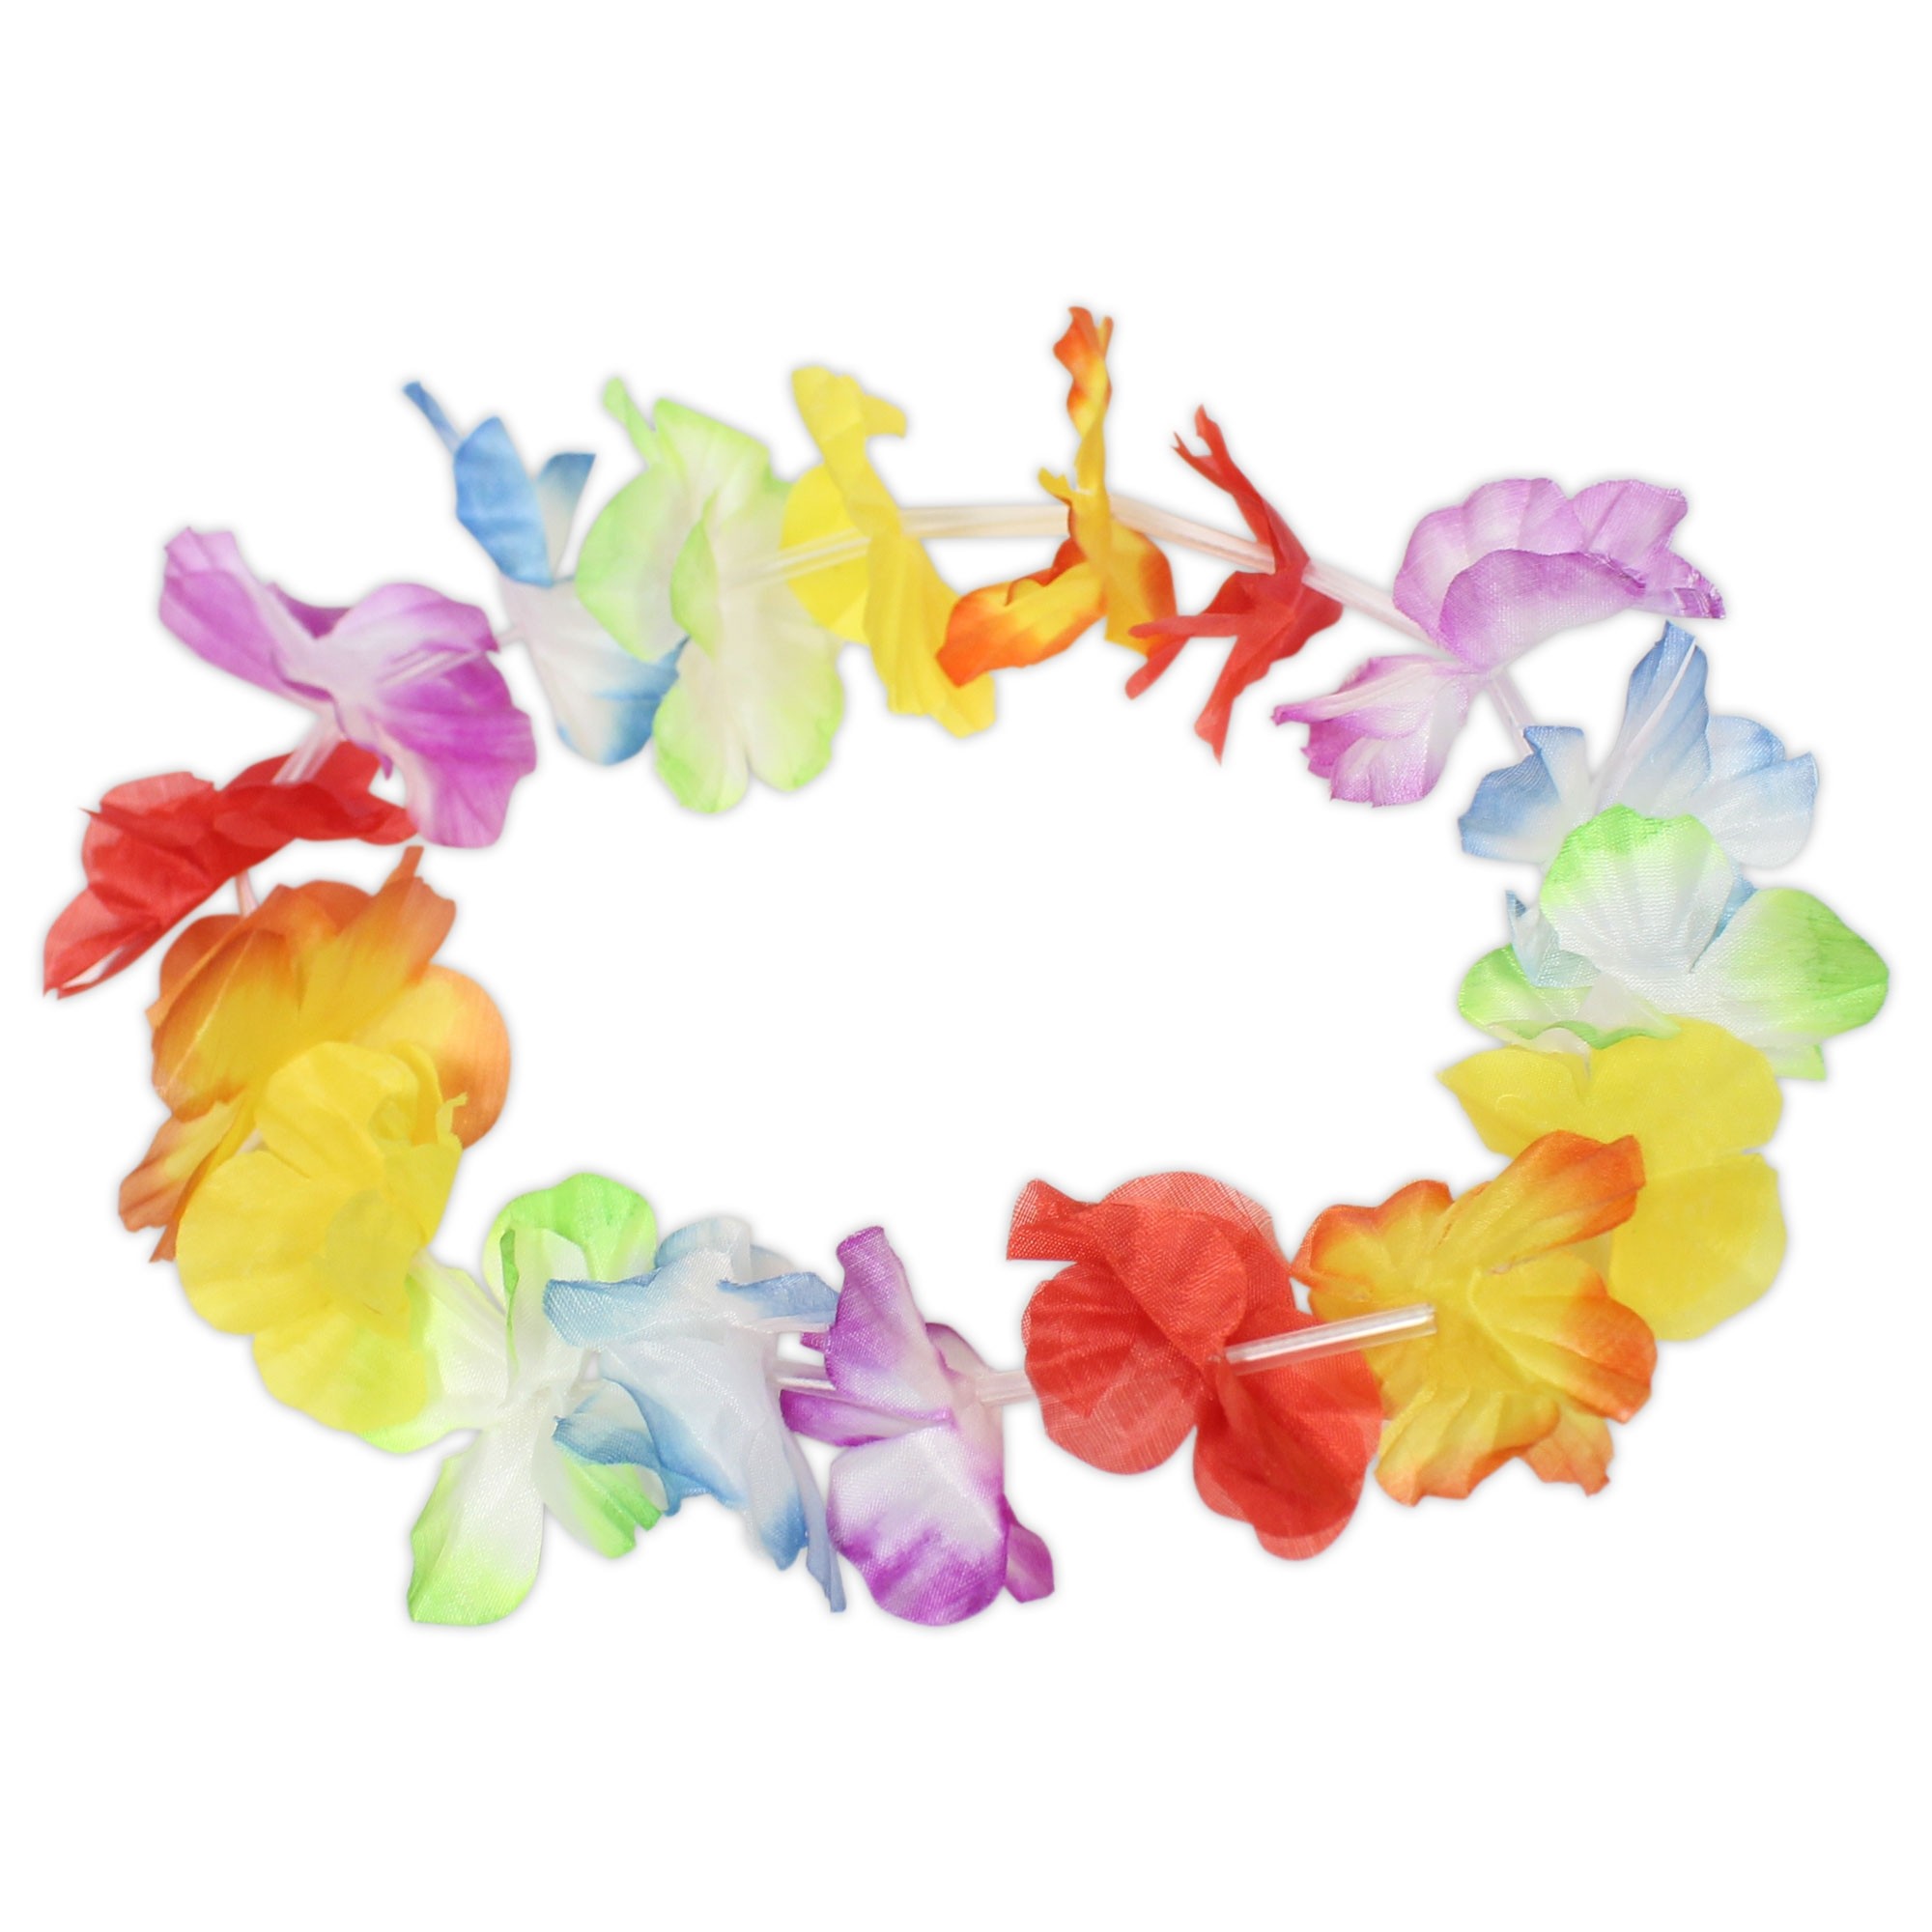 Jumbo Flower Headband - 21 inch - Leis & Beads - Products Under $1.00